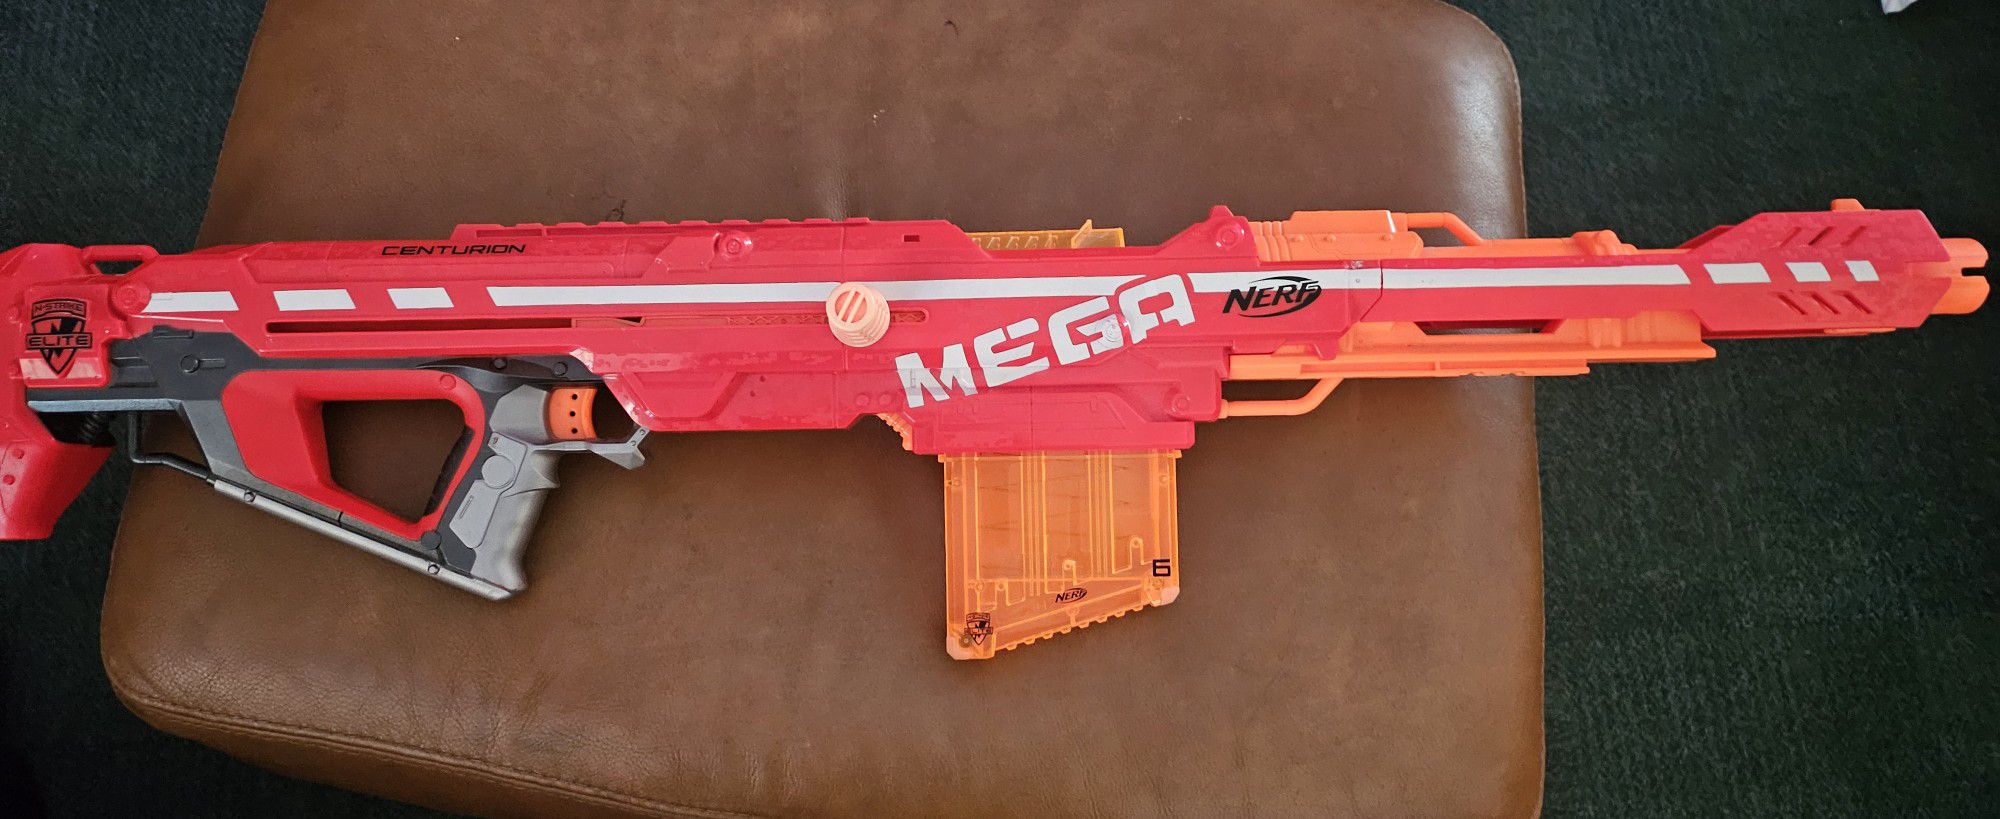 Nerf Gun Mega